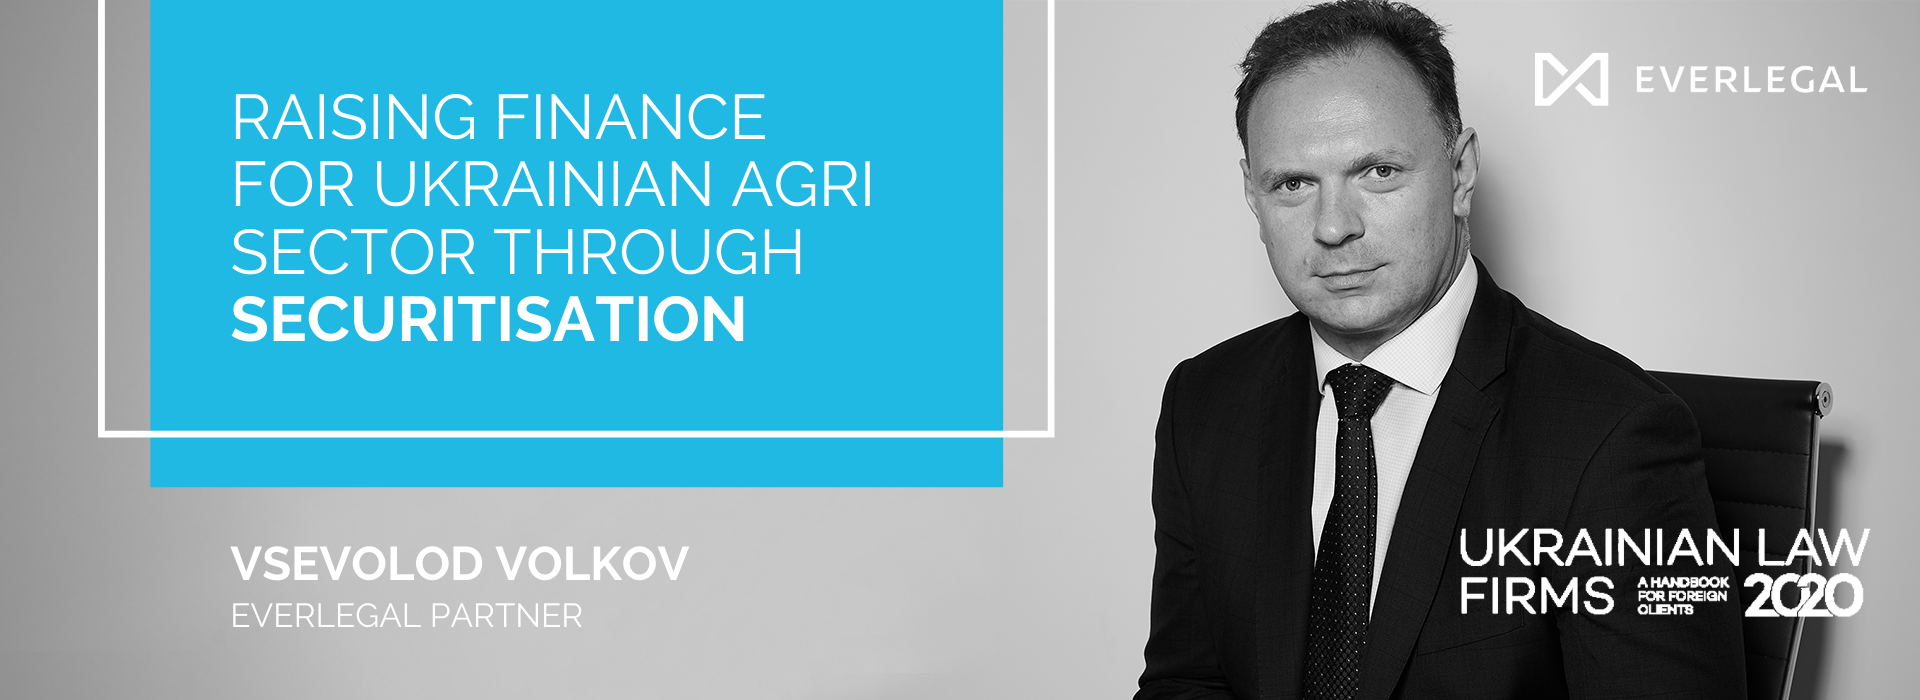 Raising Finance for Ukrainian Agri Sector Through Securitisation